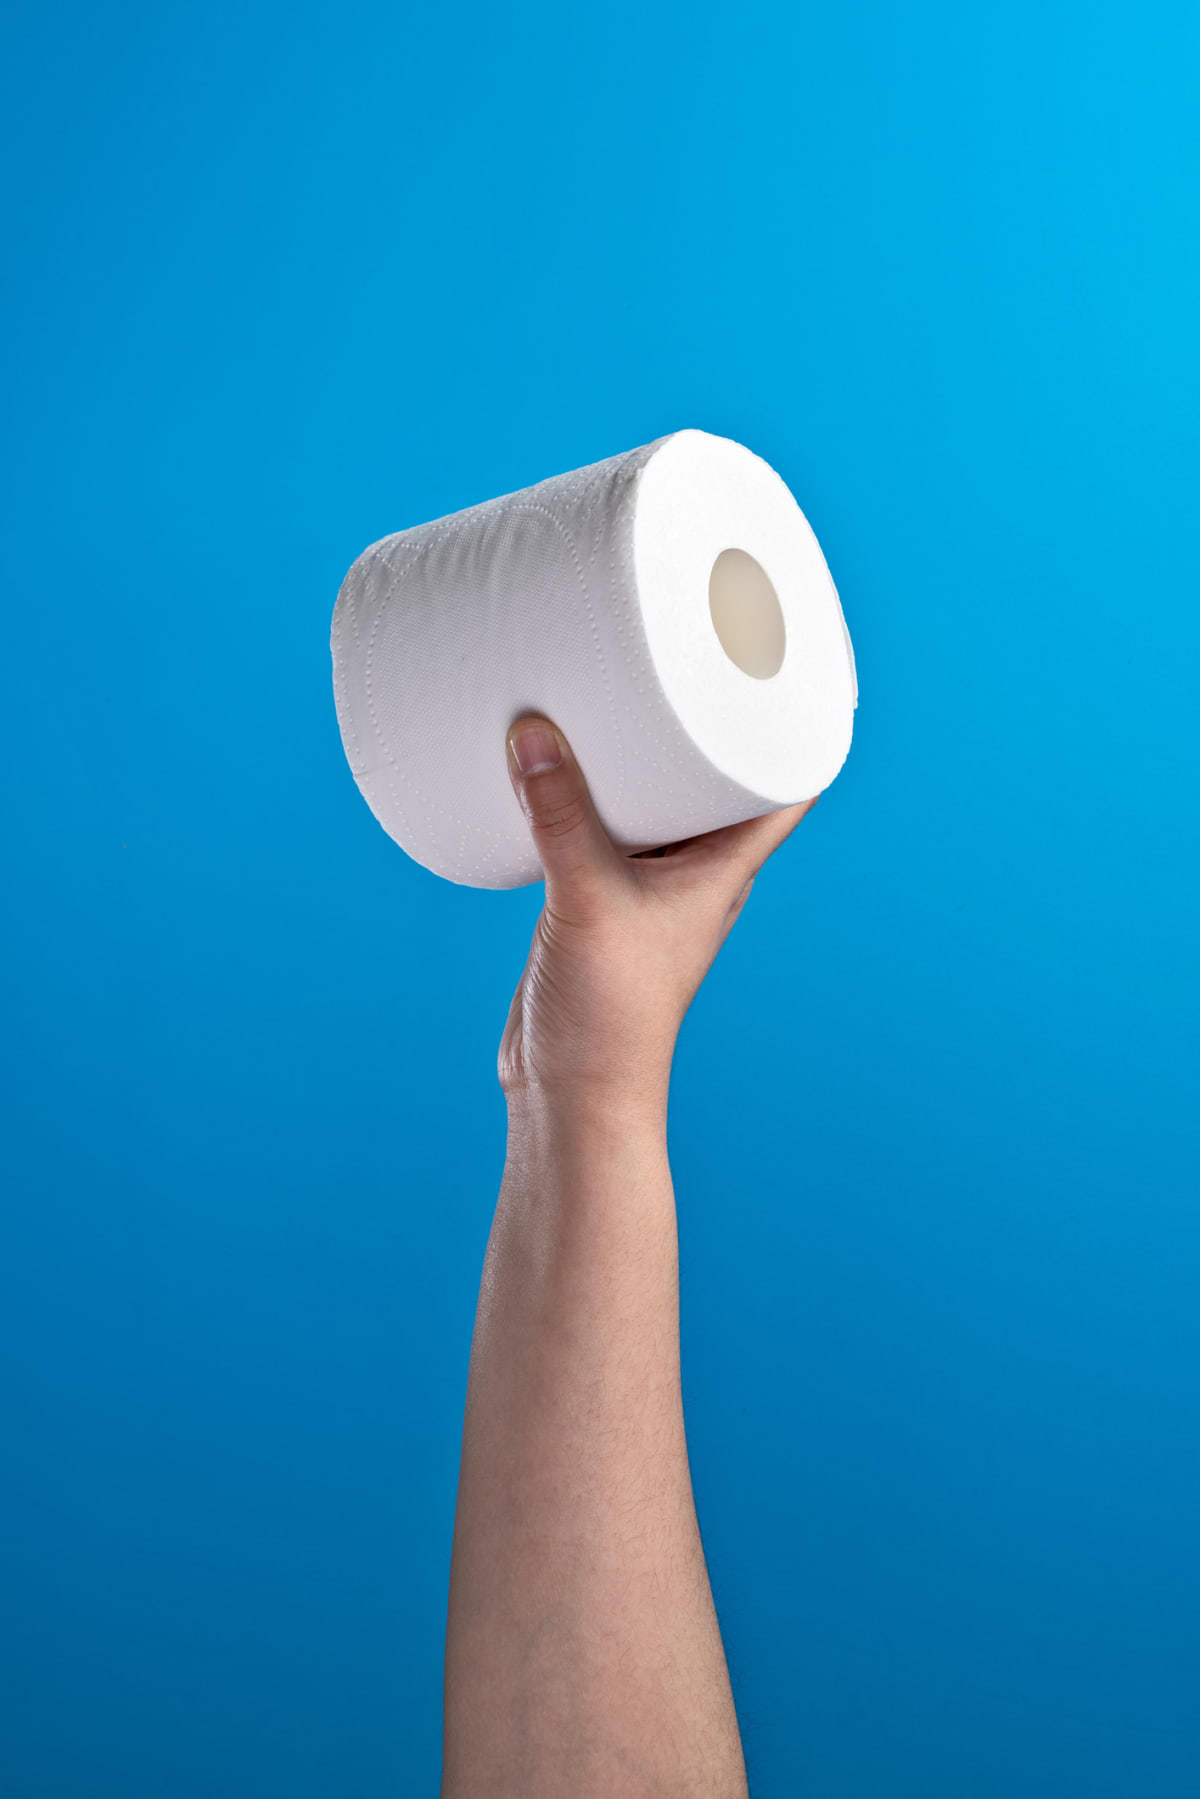 Hand holding toilet paper roll aloft